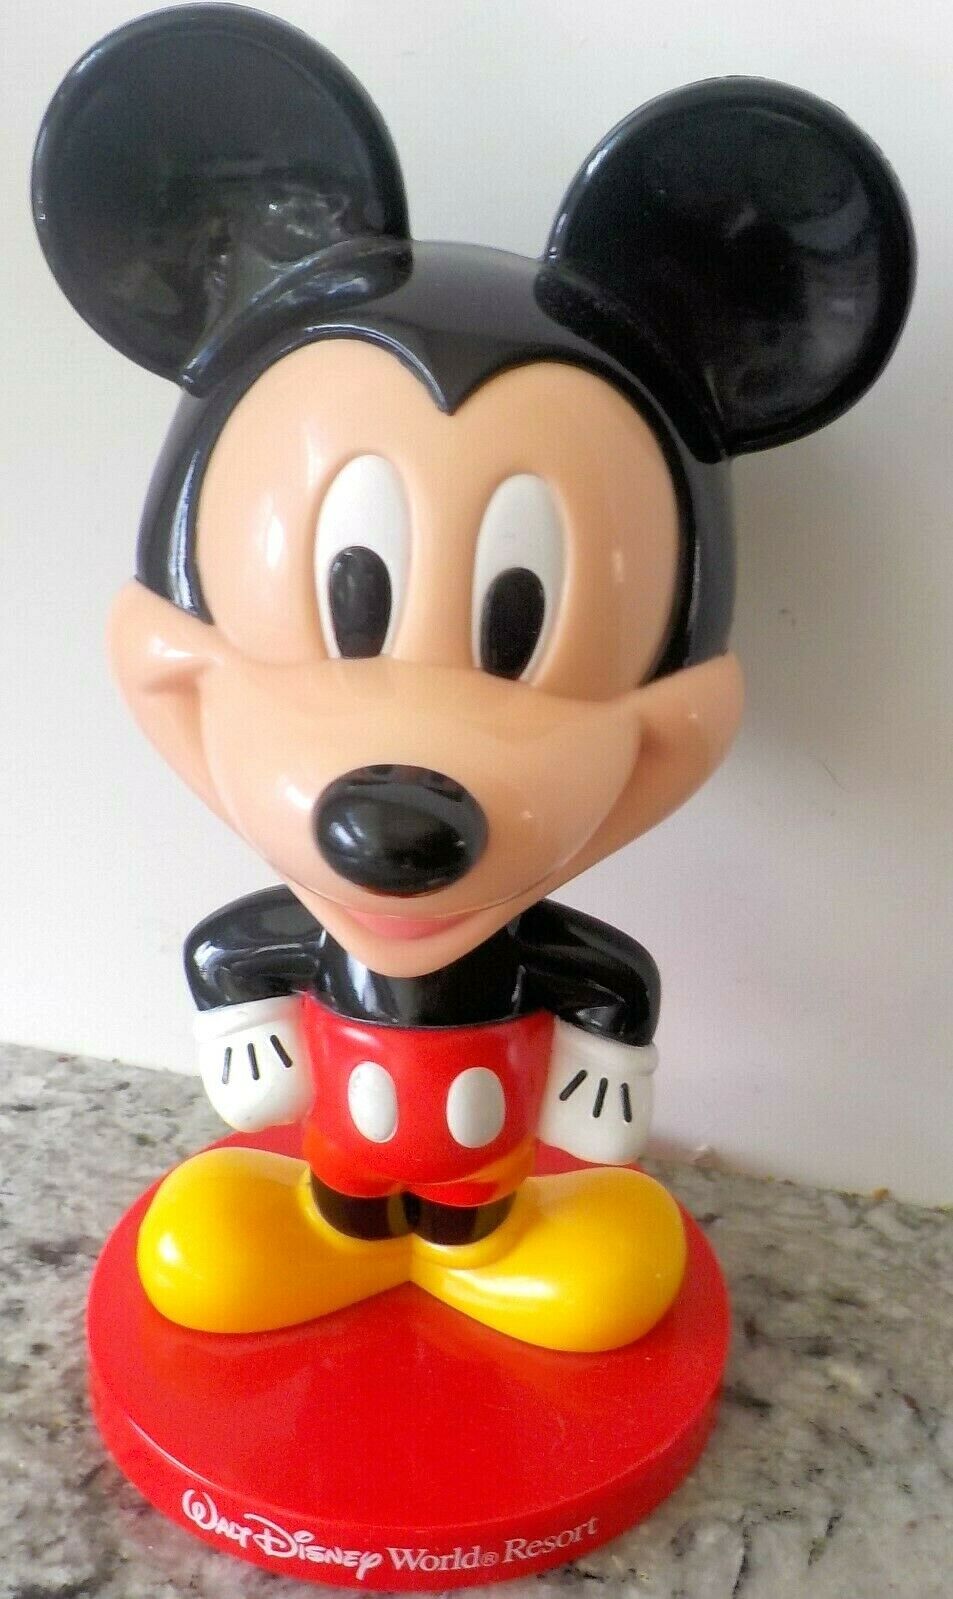 Walt Disney World Resort/ Kellogs 8" Mickey Mouse Bobble Head